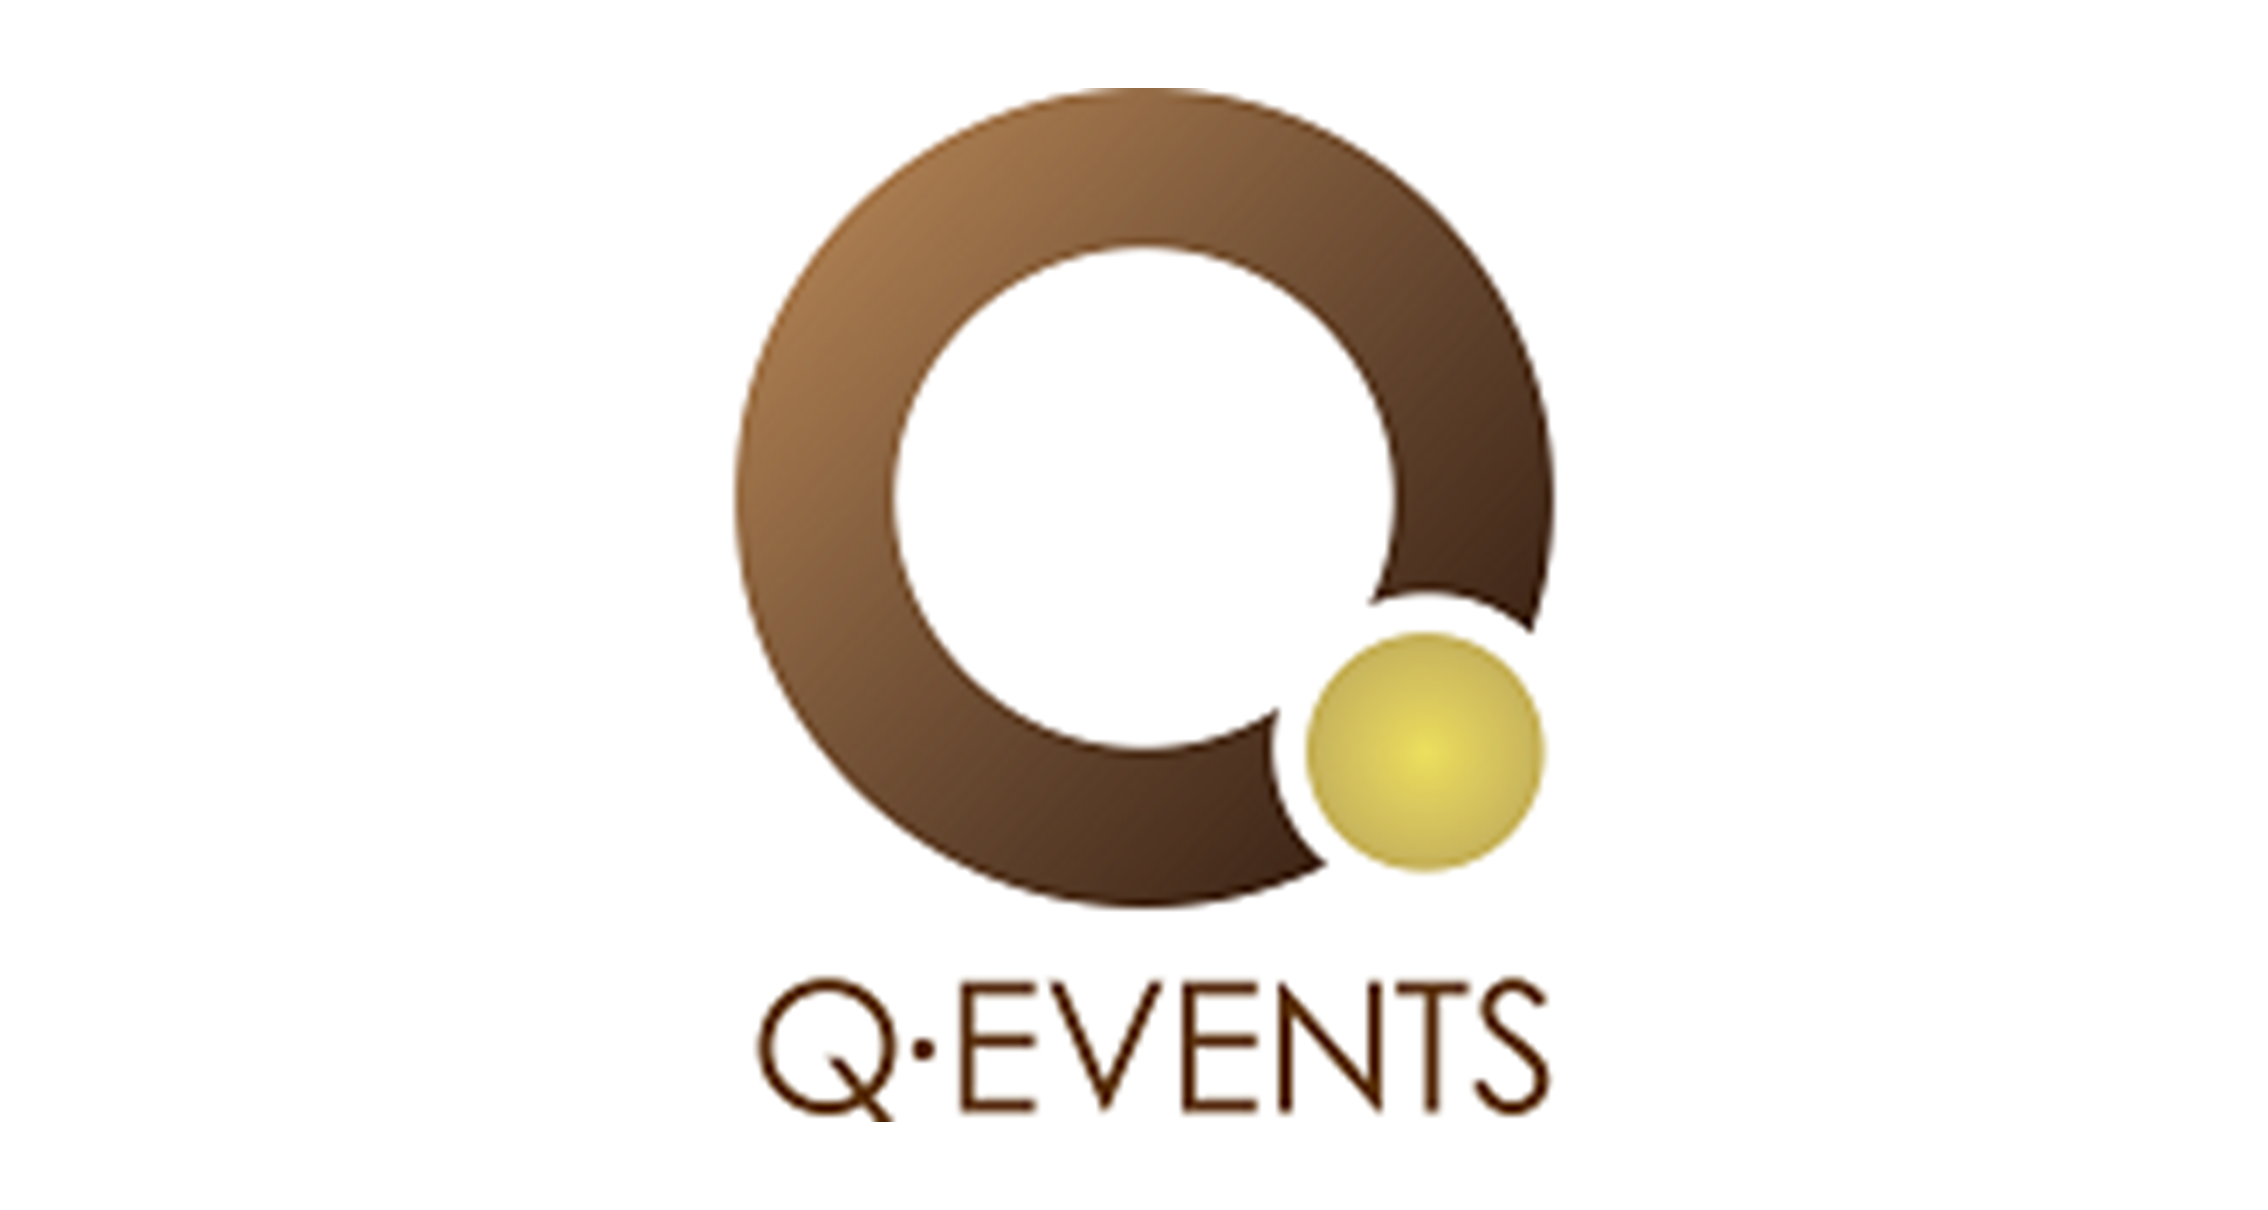 Q-EVENTS